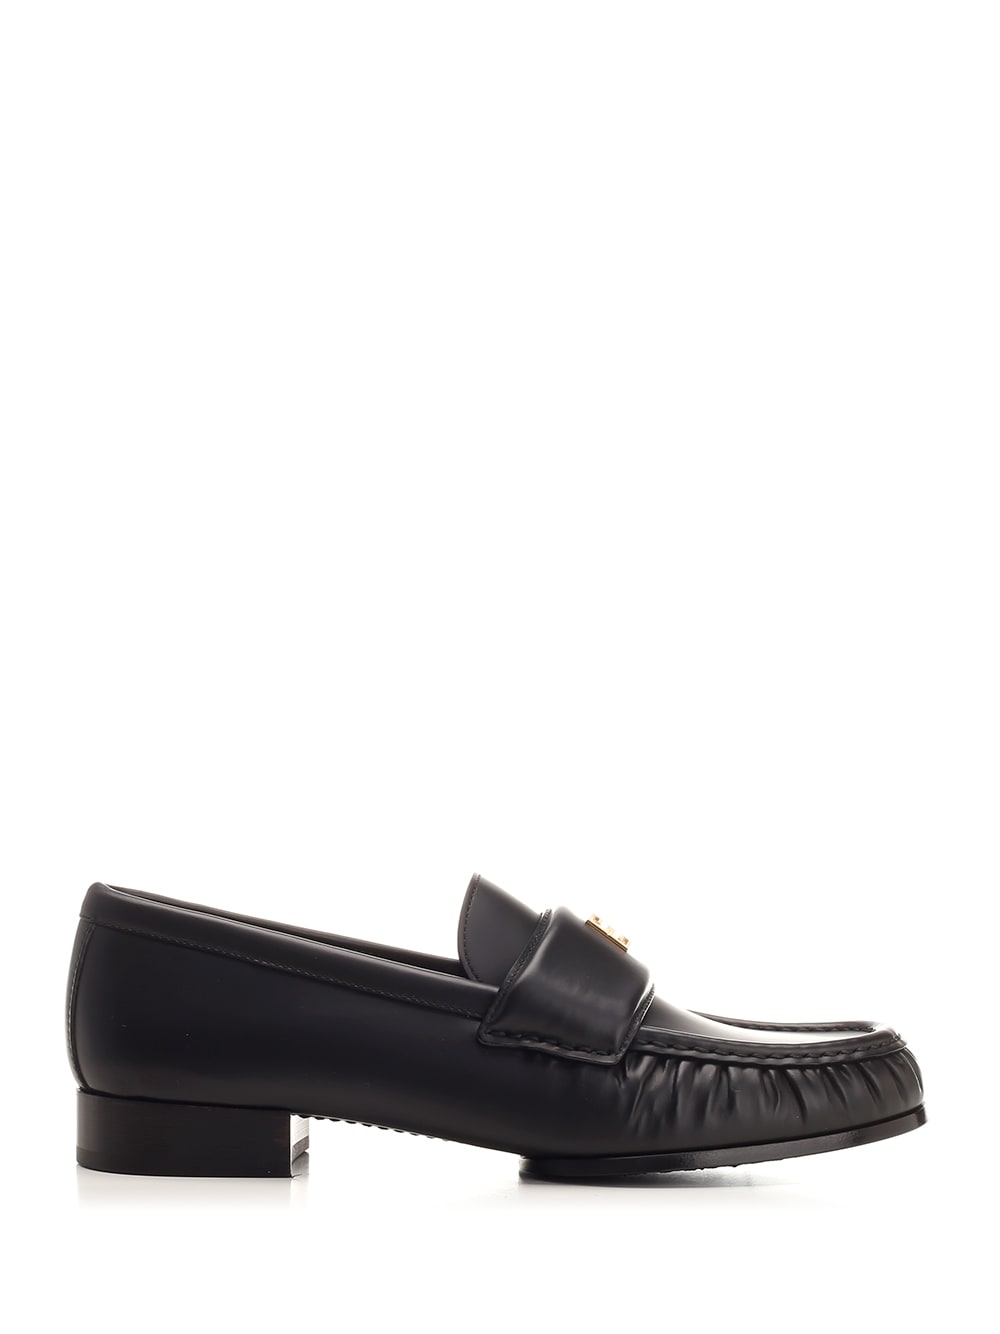 Givenchy 4g Loafer In Black